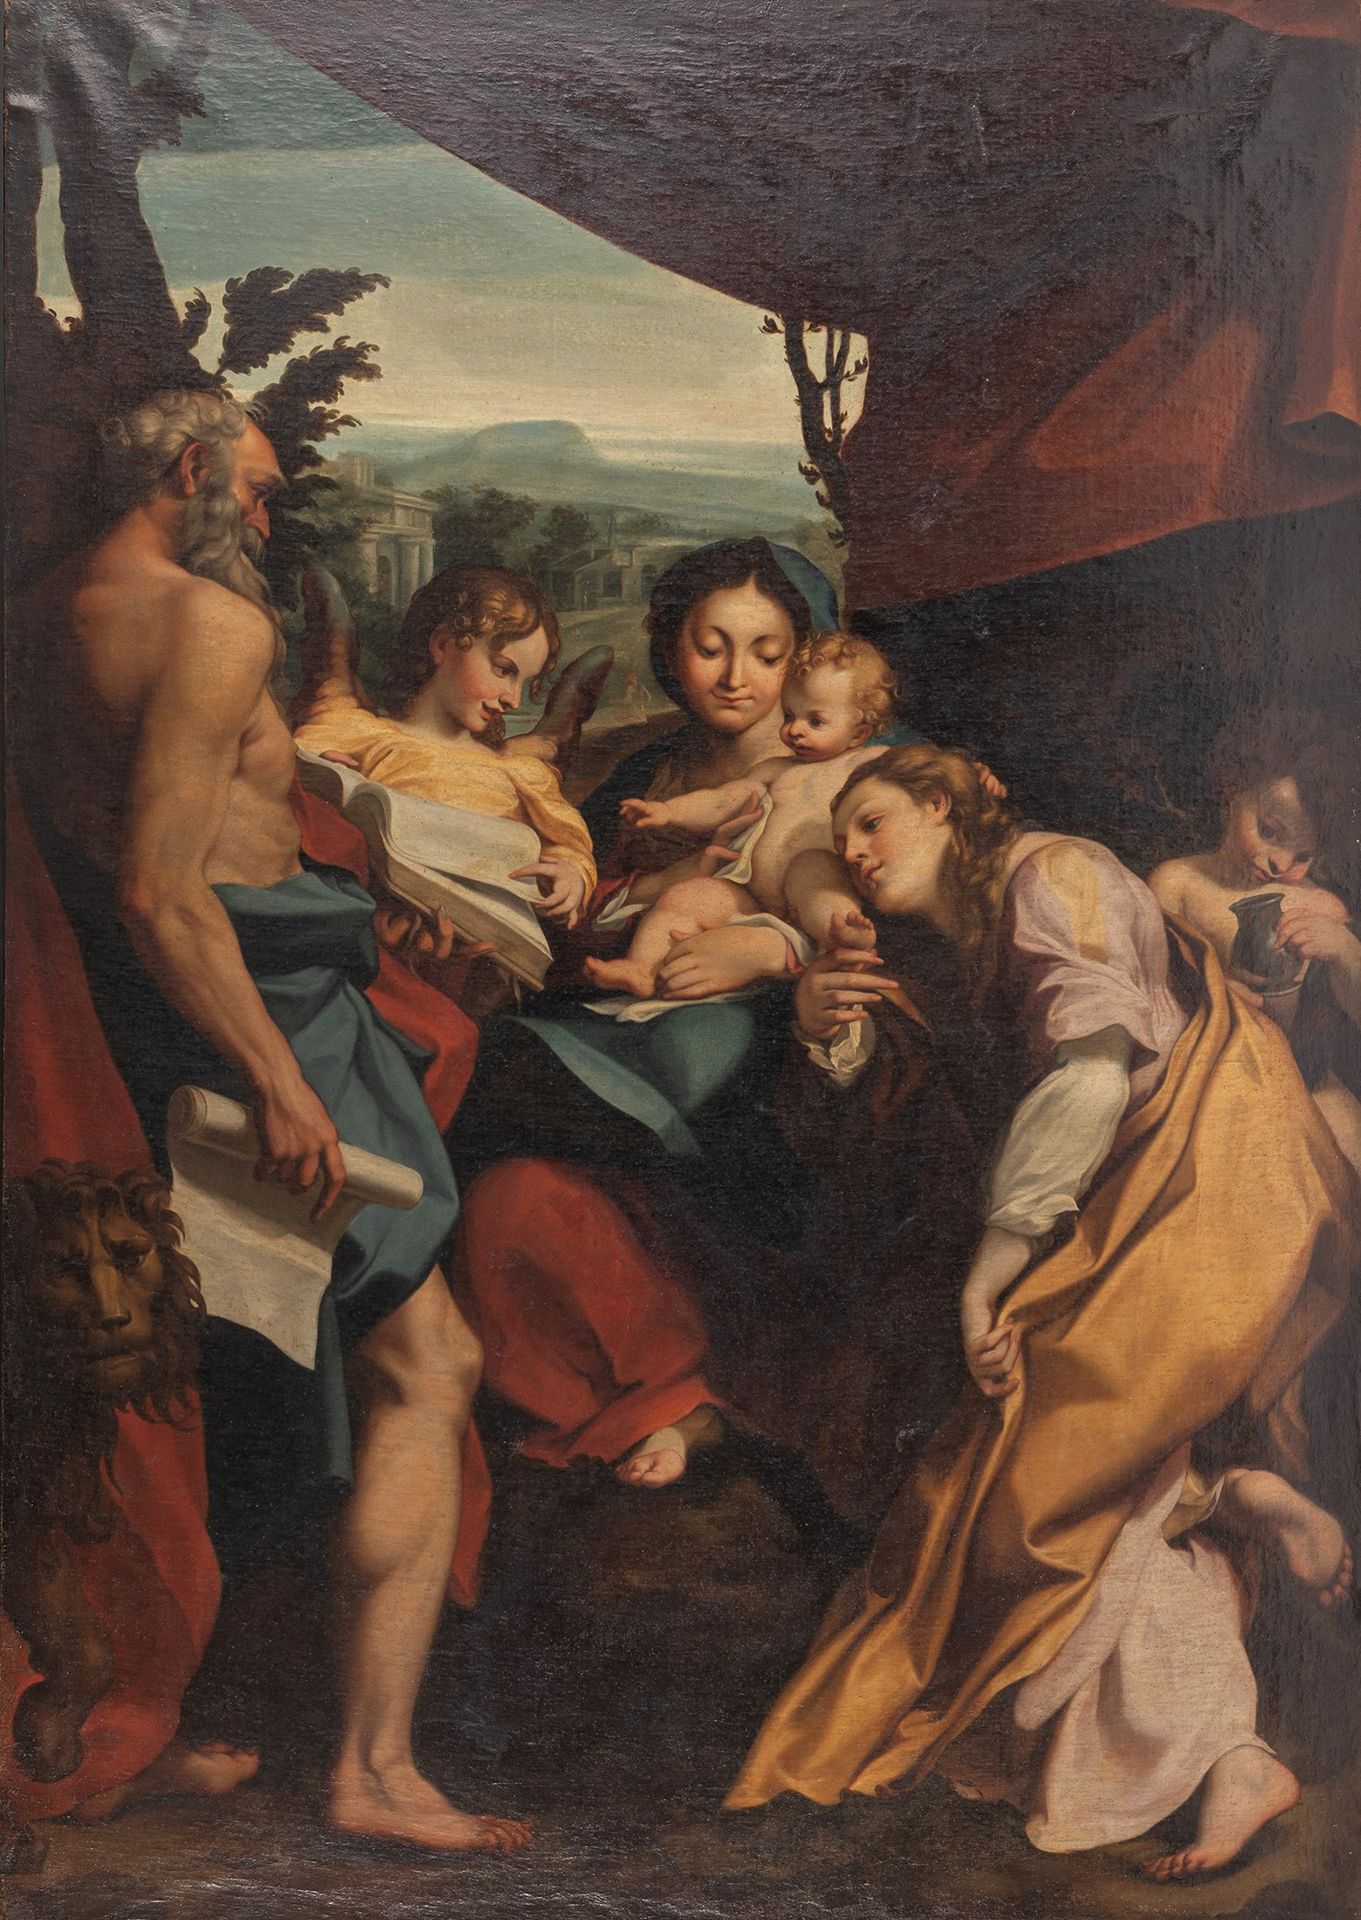 Null Da Correggio, secoli XVII - XVIII - La Madone de San Girolamo (Le jour)

hu&hellip;